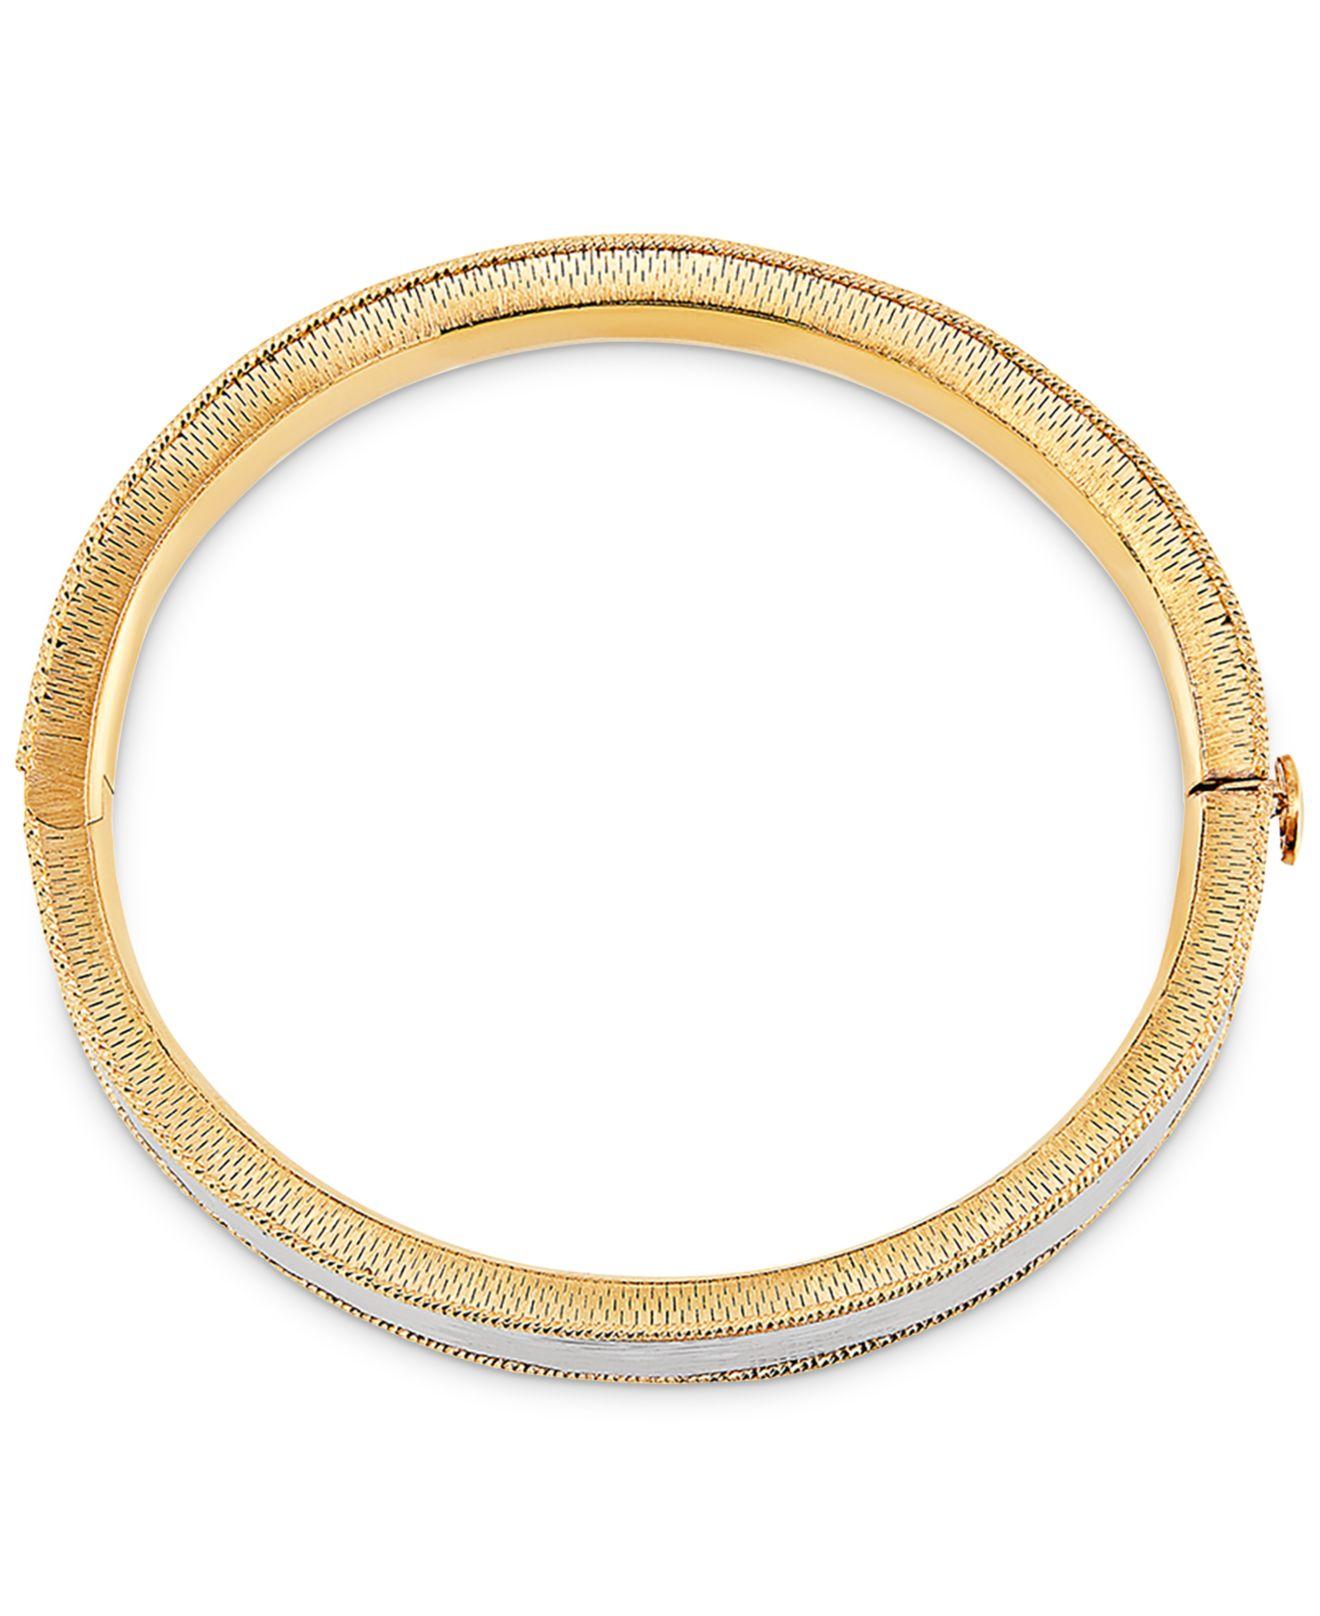 Macy's Diamond Bolo Bracelet (2 ct. t.w.) in 14k White Gold - Macy's